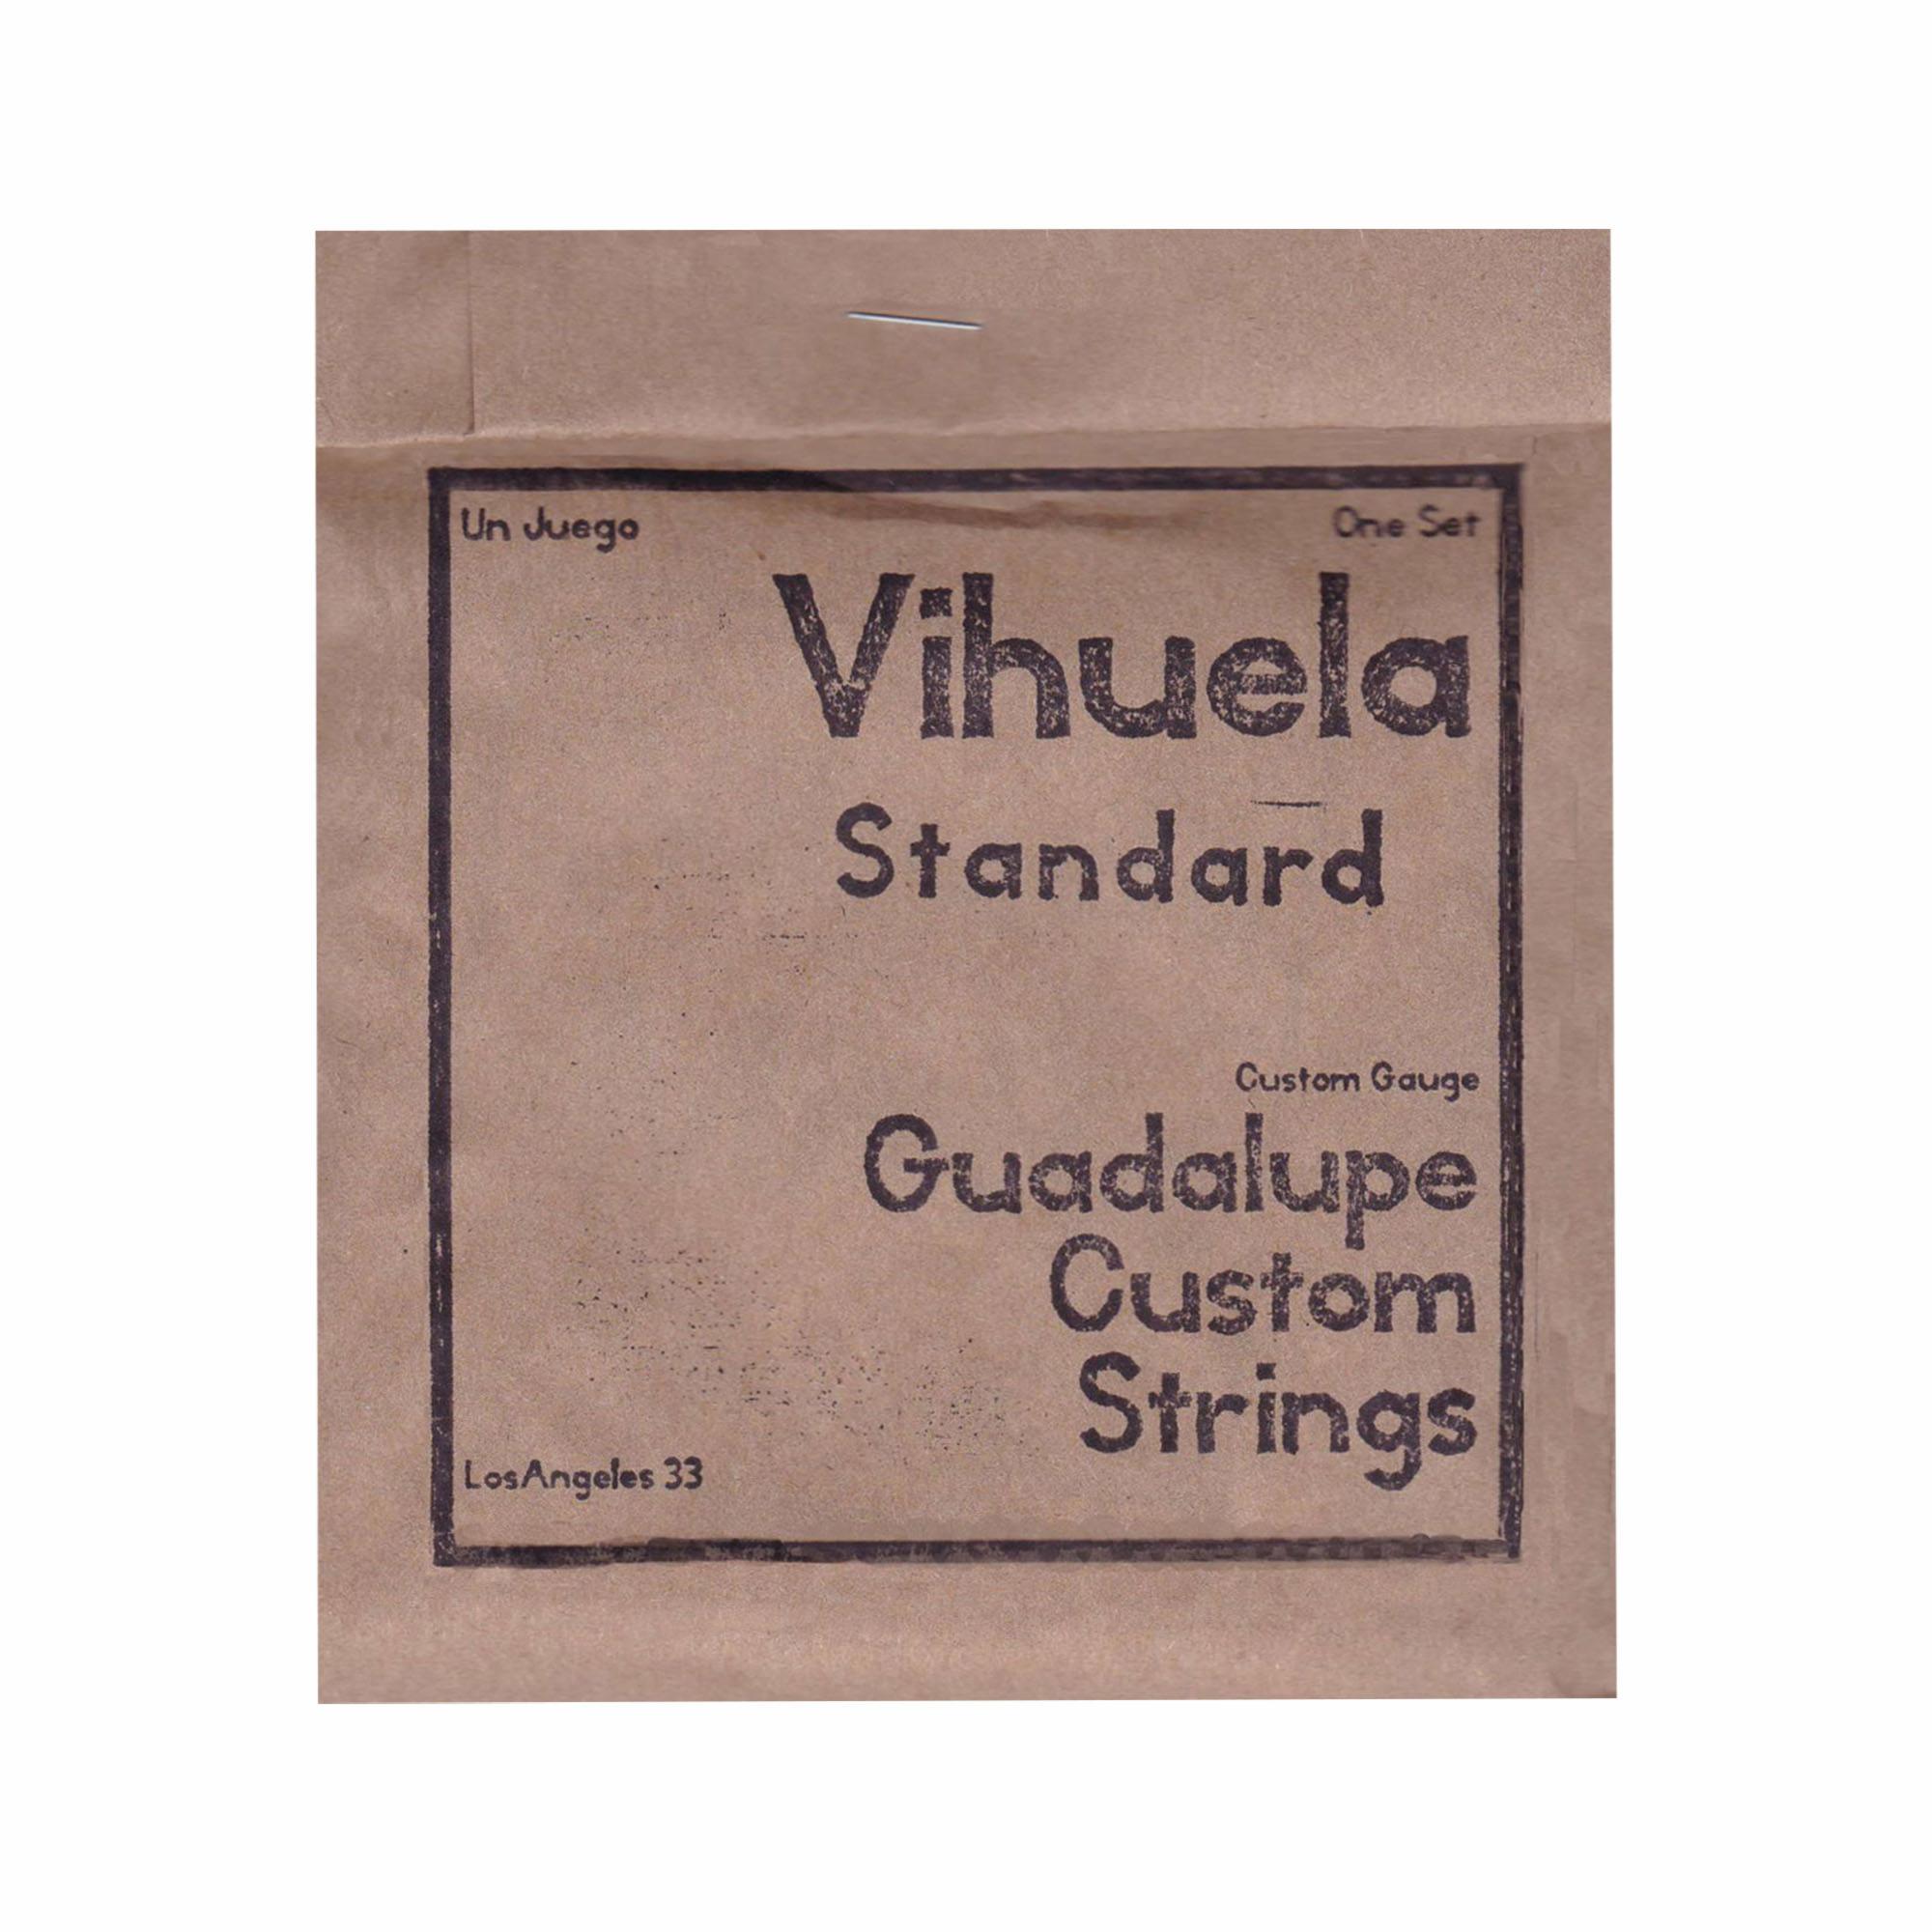 Guadalupe Vihuela Mariachi Strings